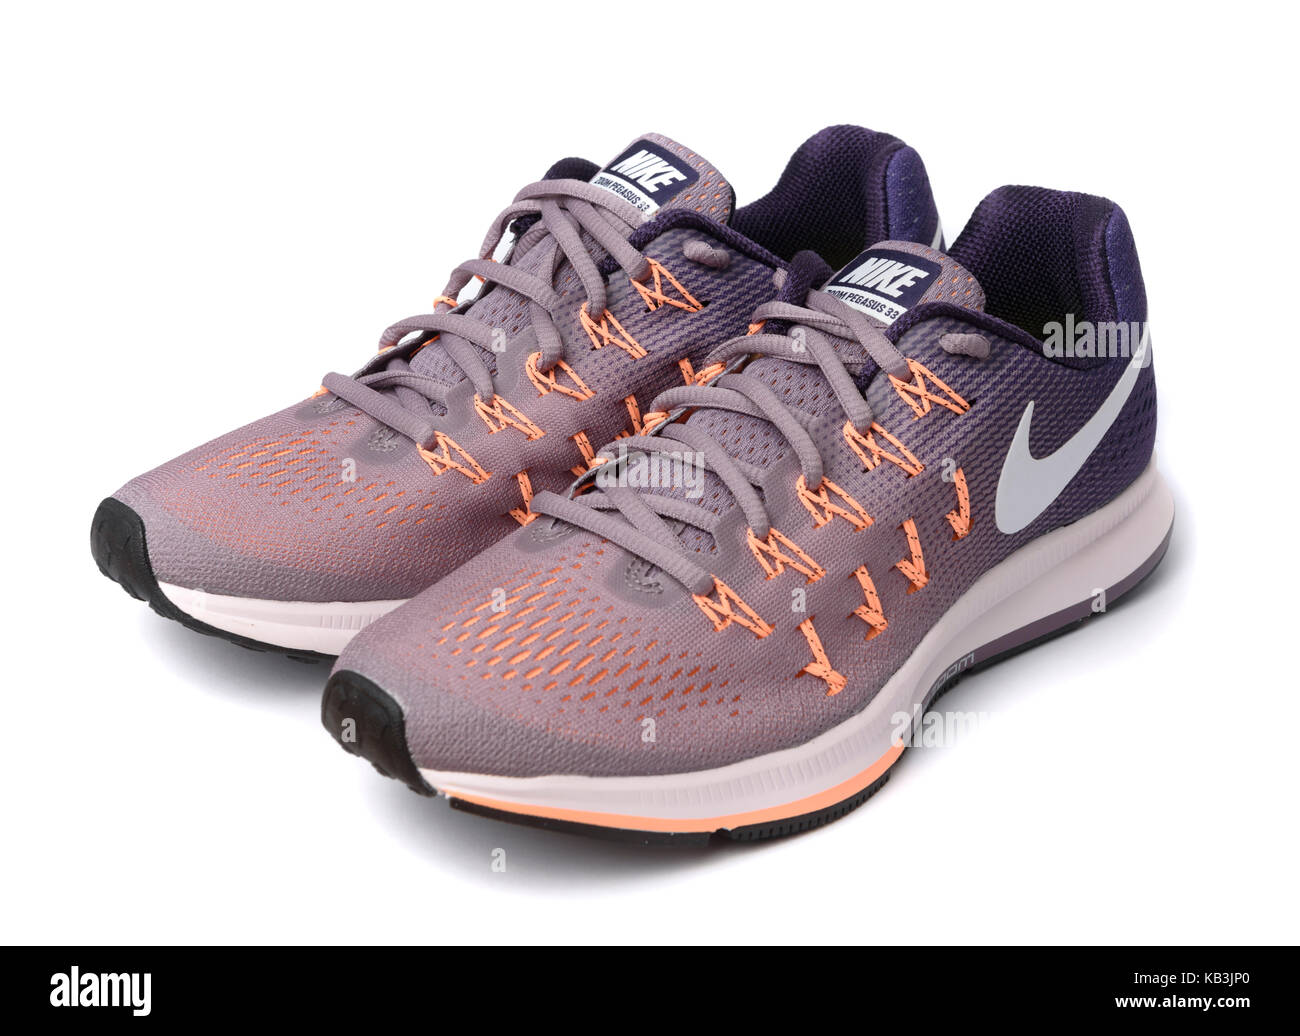 Viola e arancione Nike Pegasus 33 scarpe running isolati su sfondo bianco Foto Stock